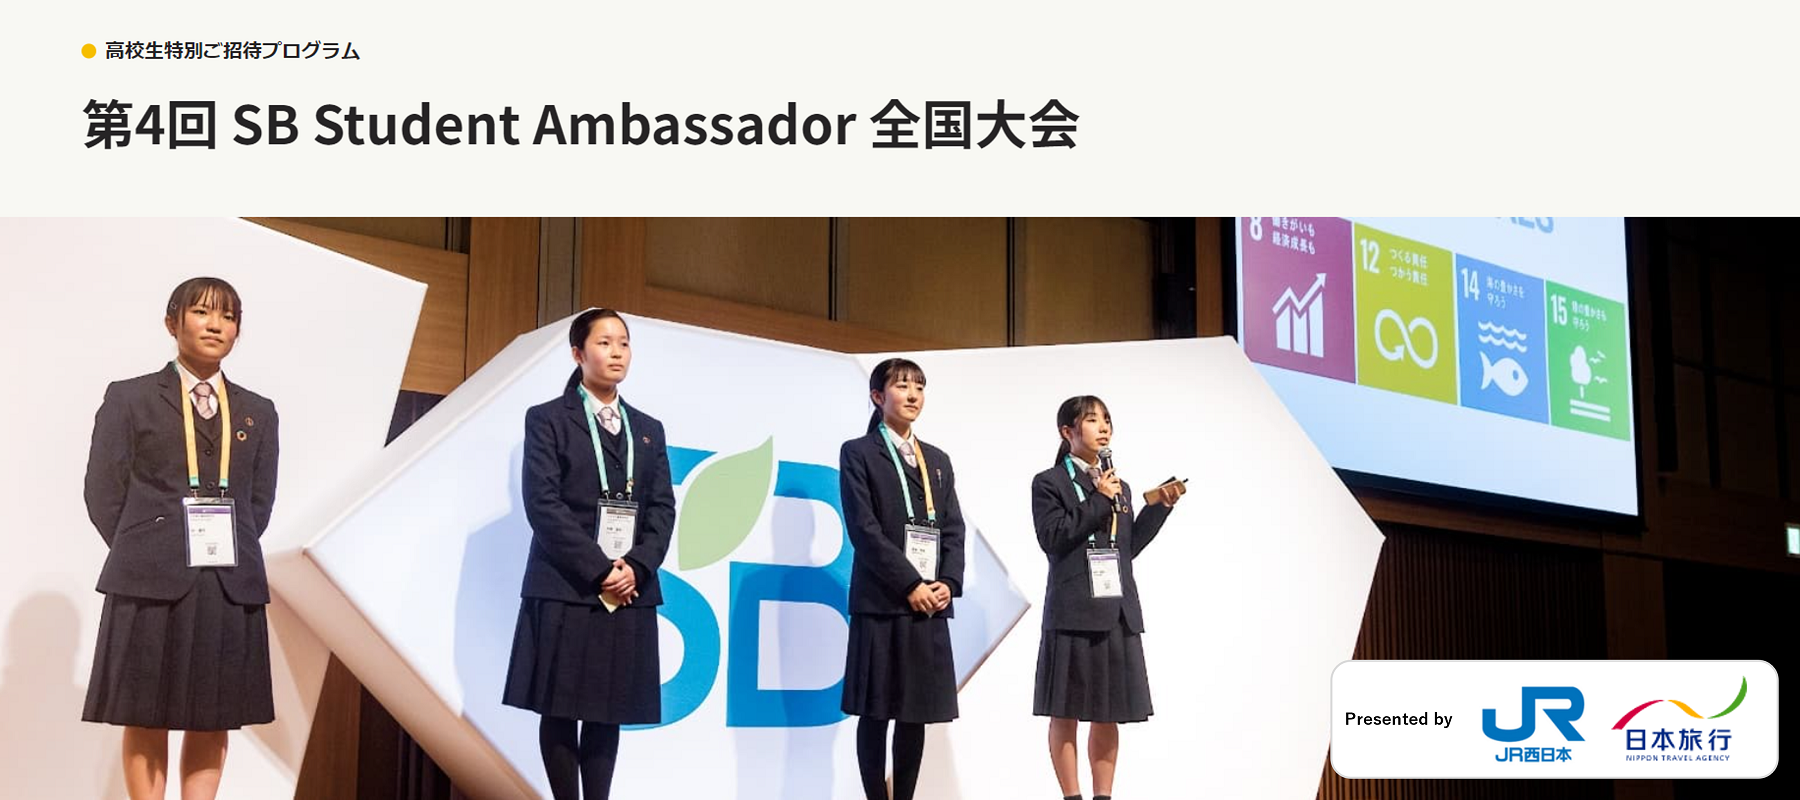 SZSDGswсATXeiuȎЉ̎ڎwu4 SB Student Ambassador SvJ